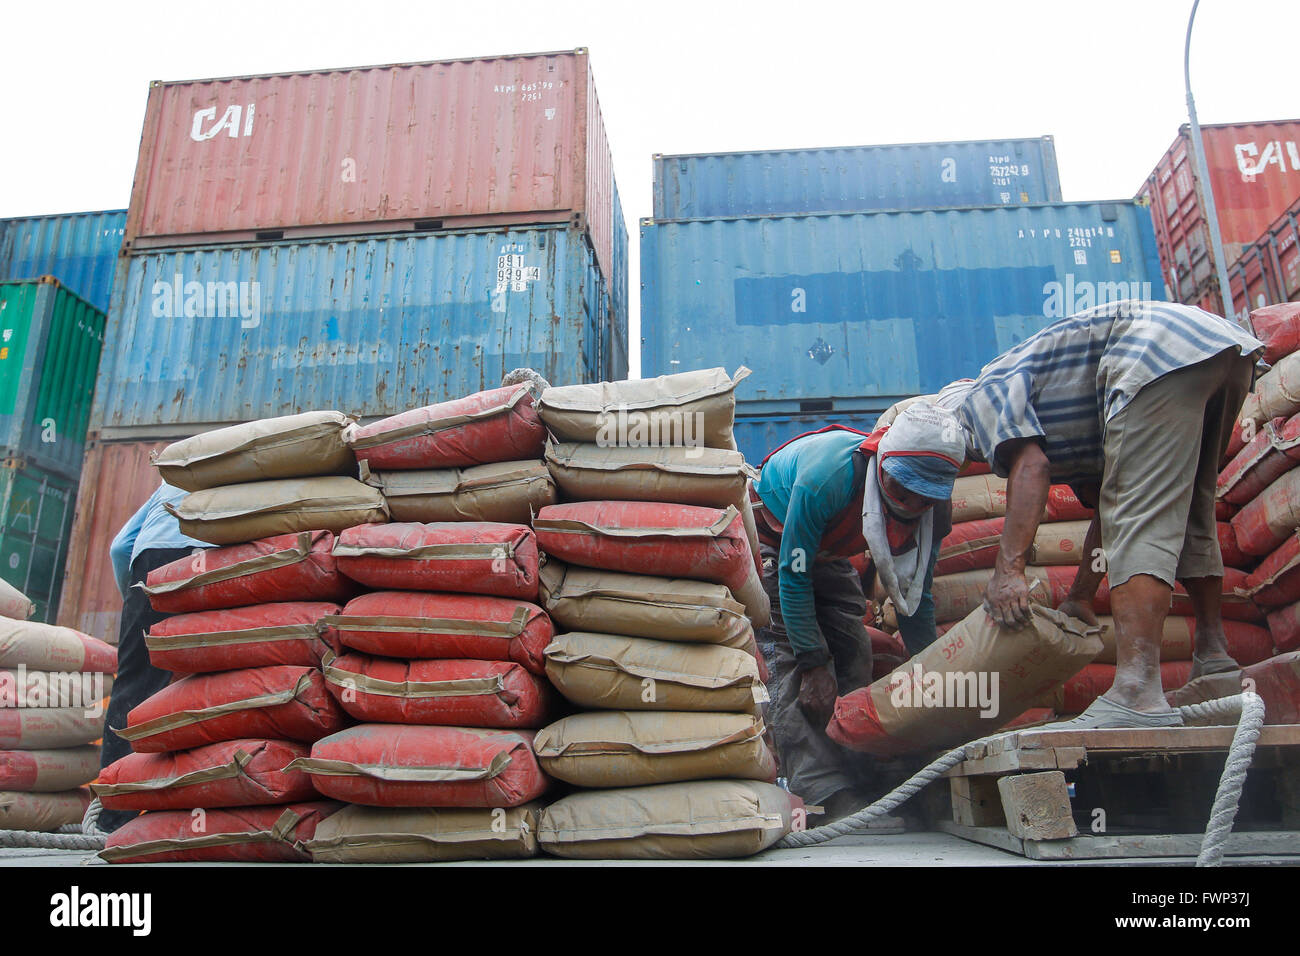 Jakarta, Indonesia. 30th Mar, 2016. Workers arrange sacks of cement